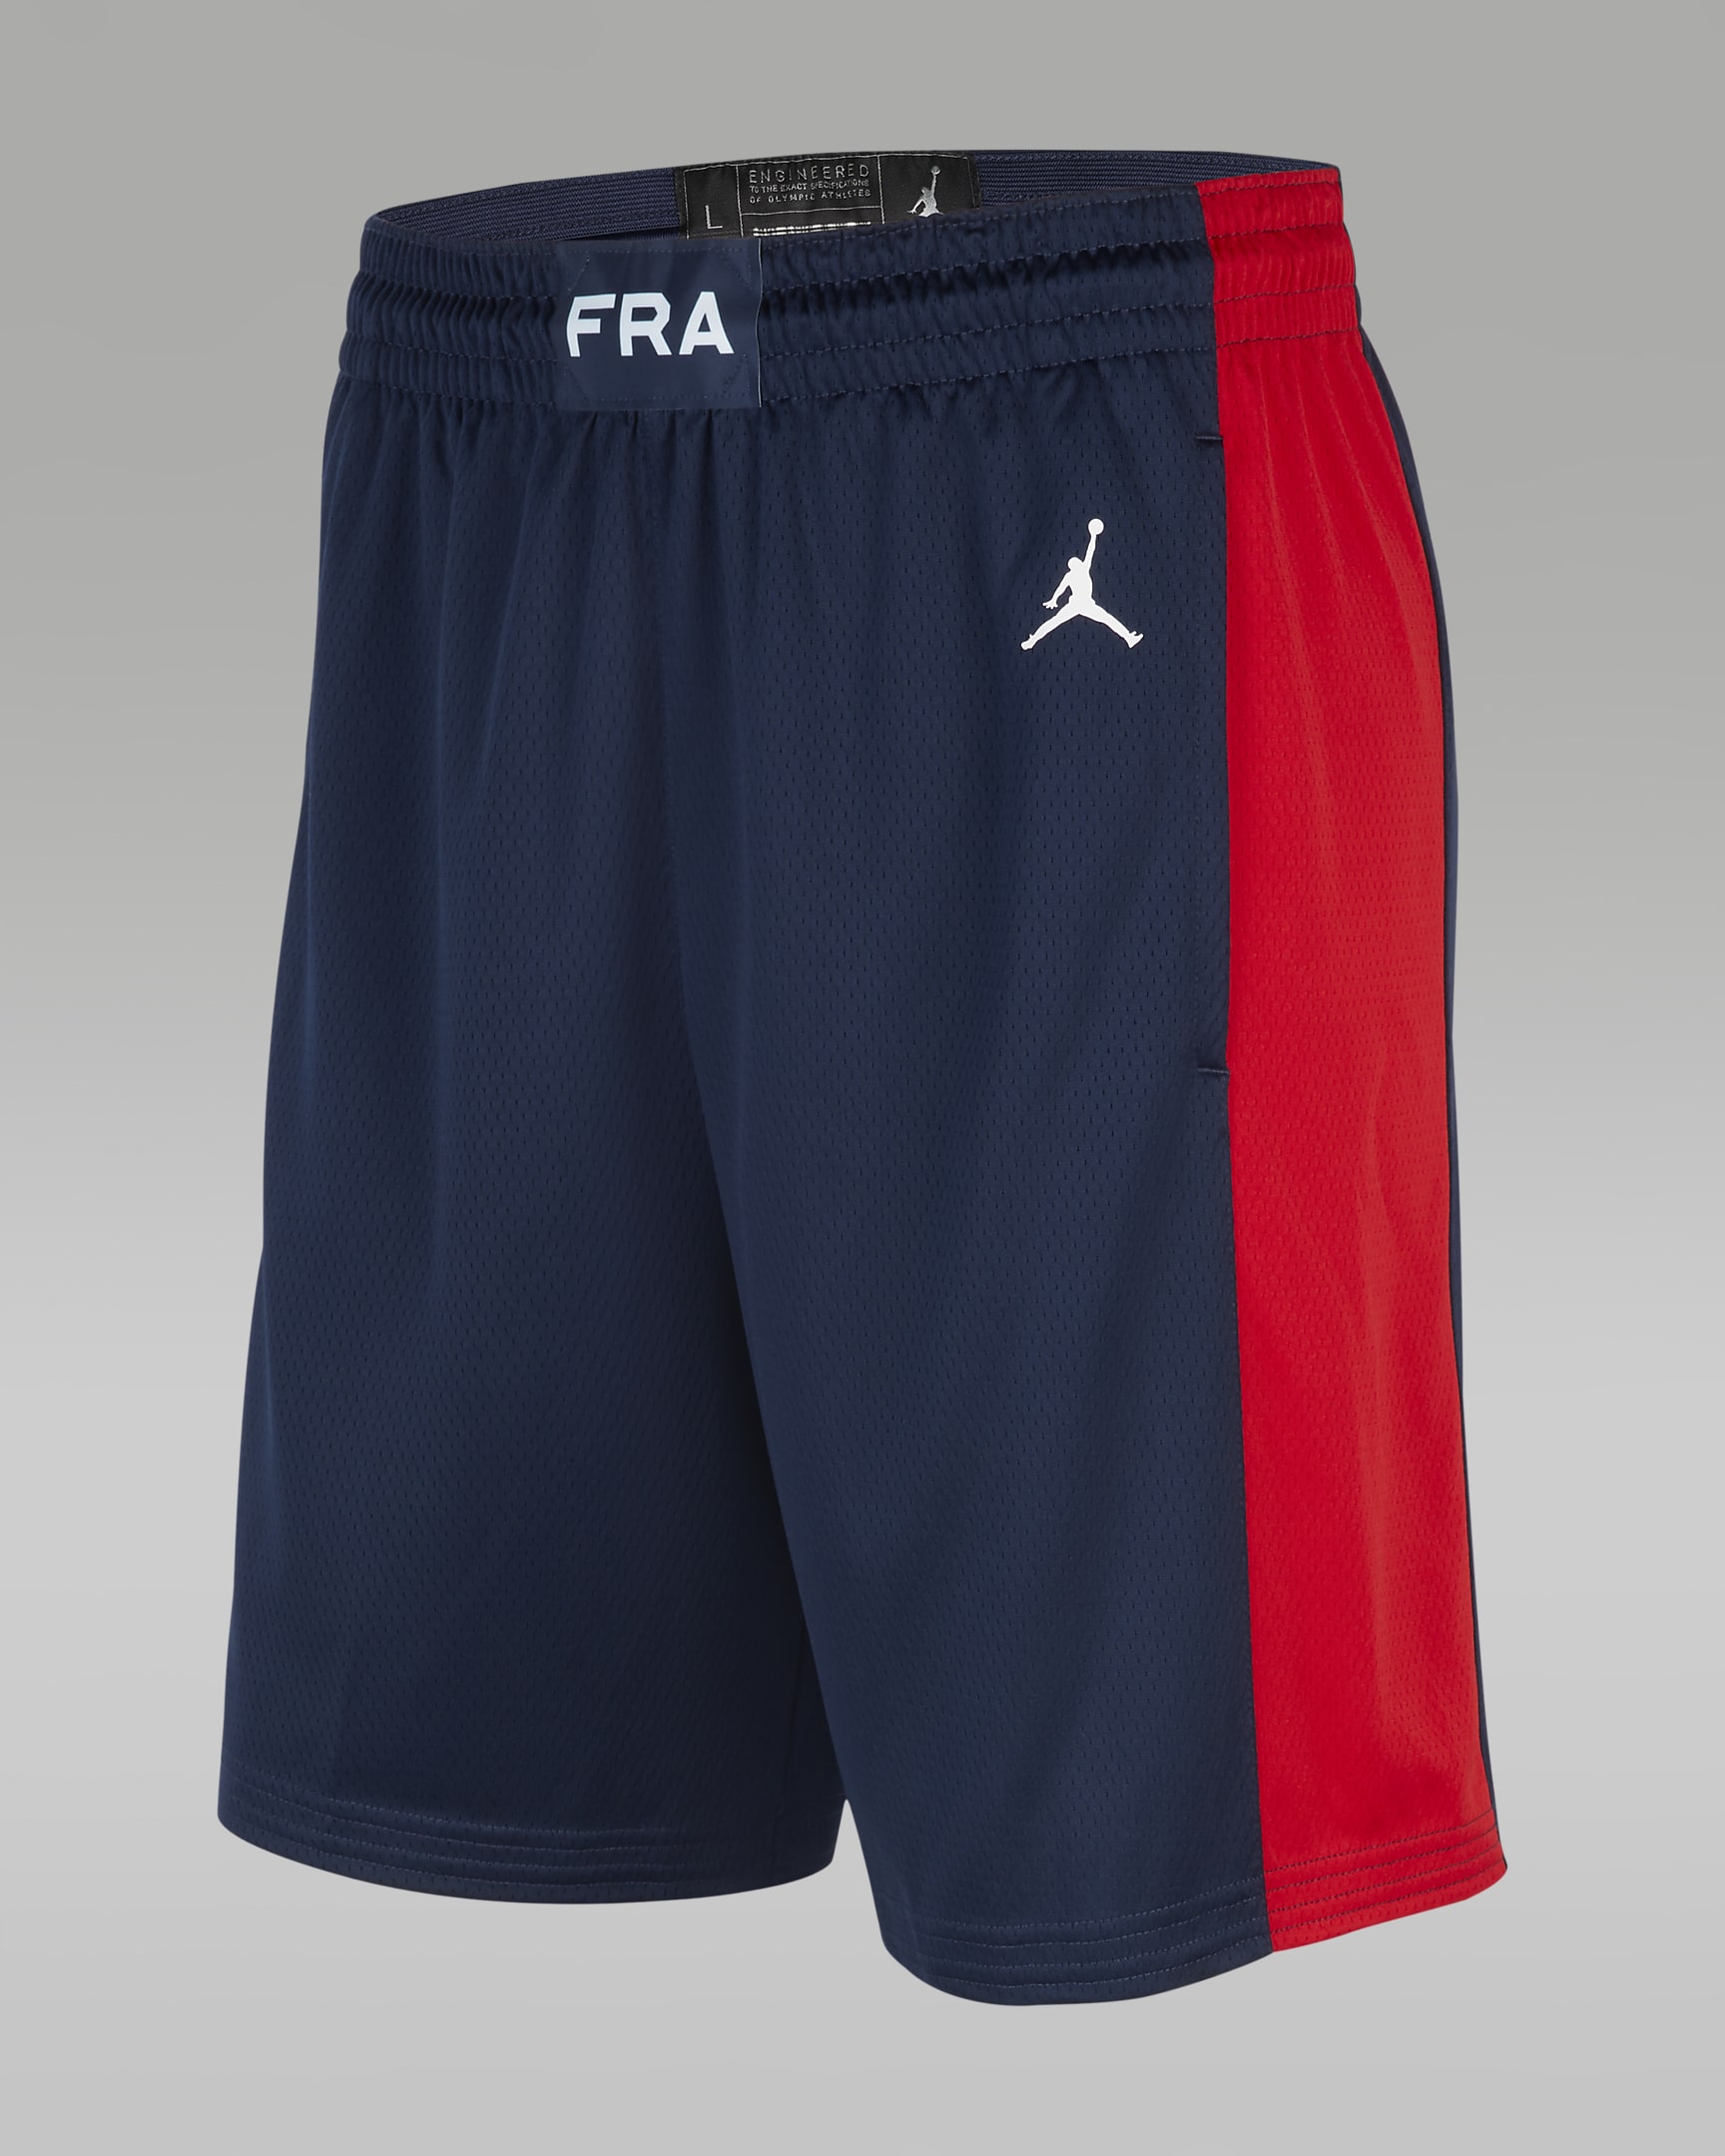 France Jordan Short 